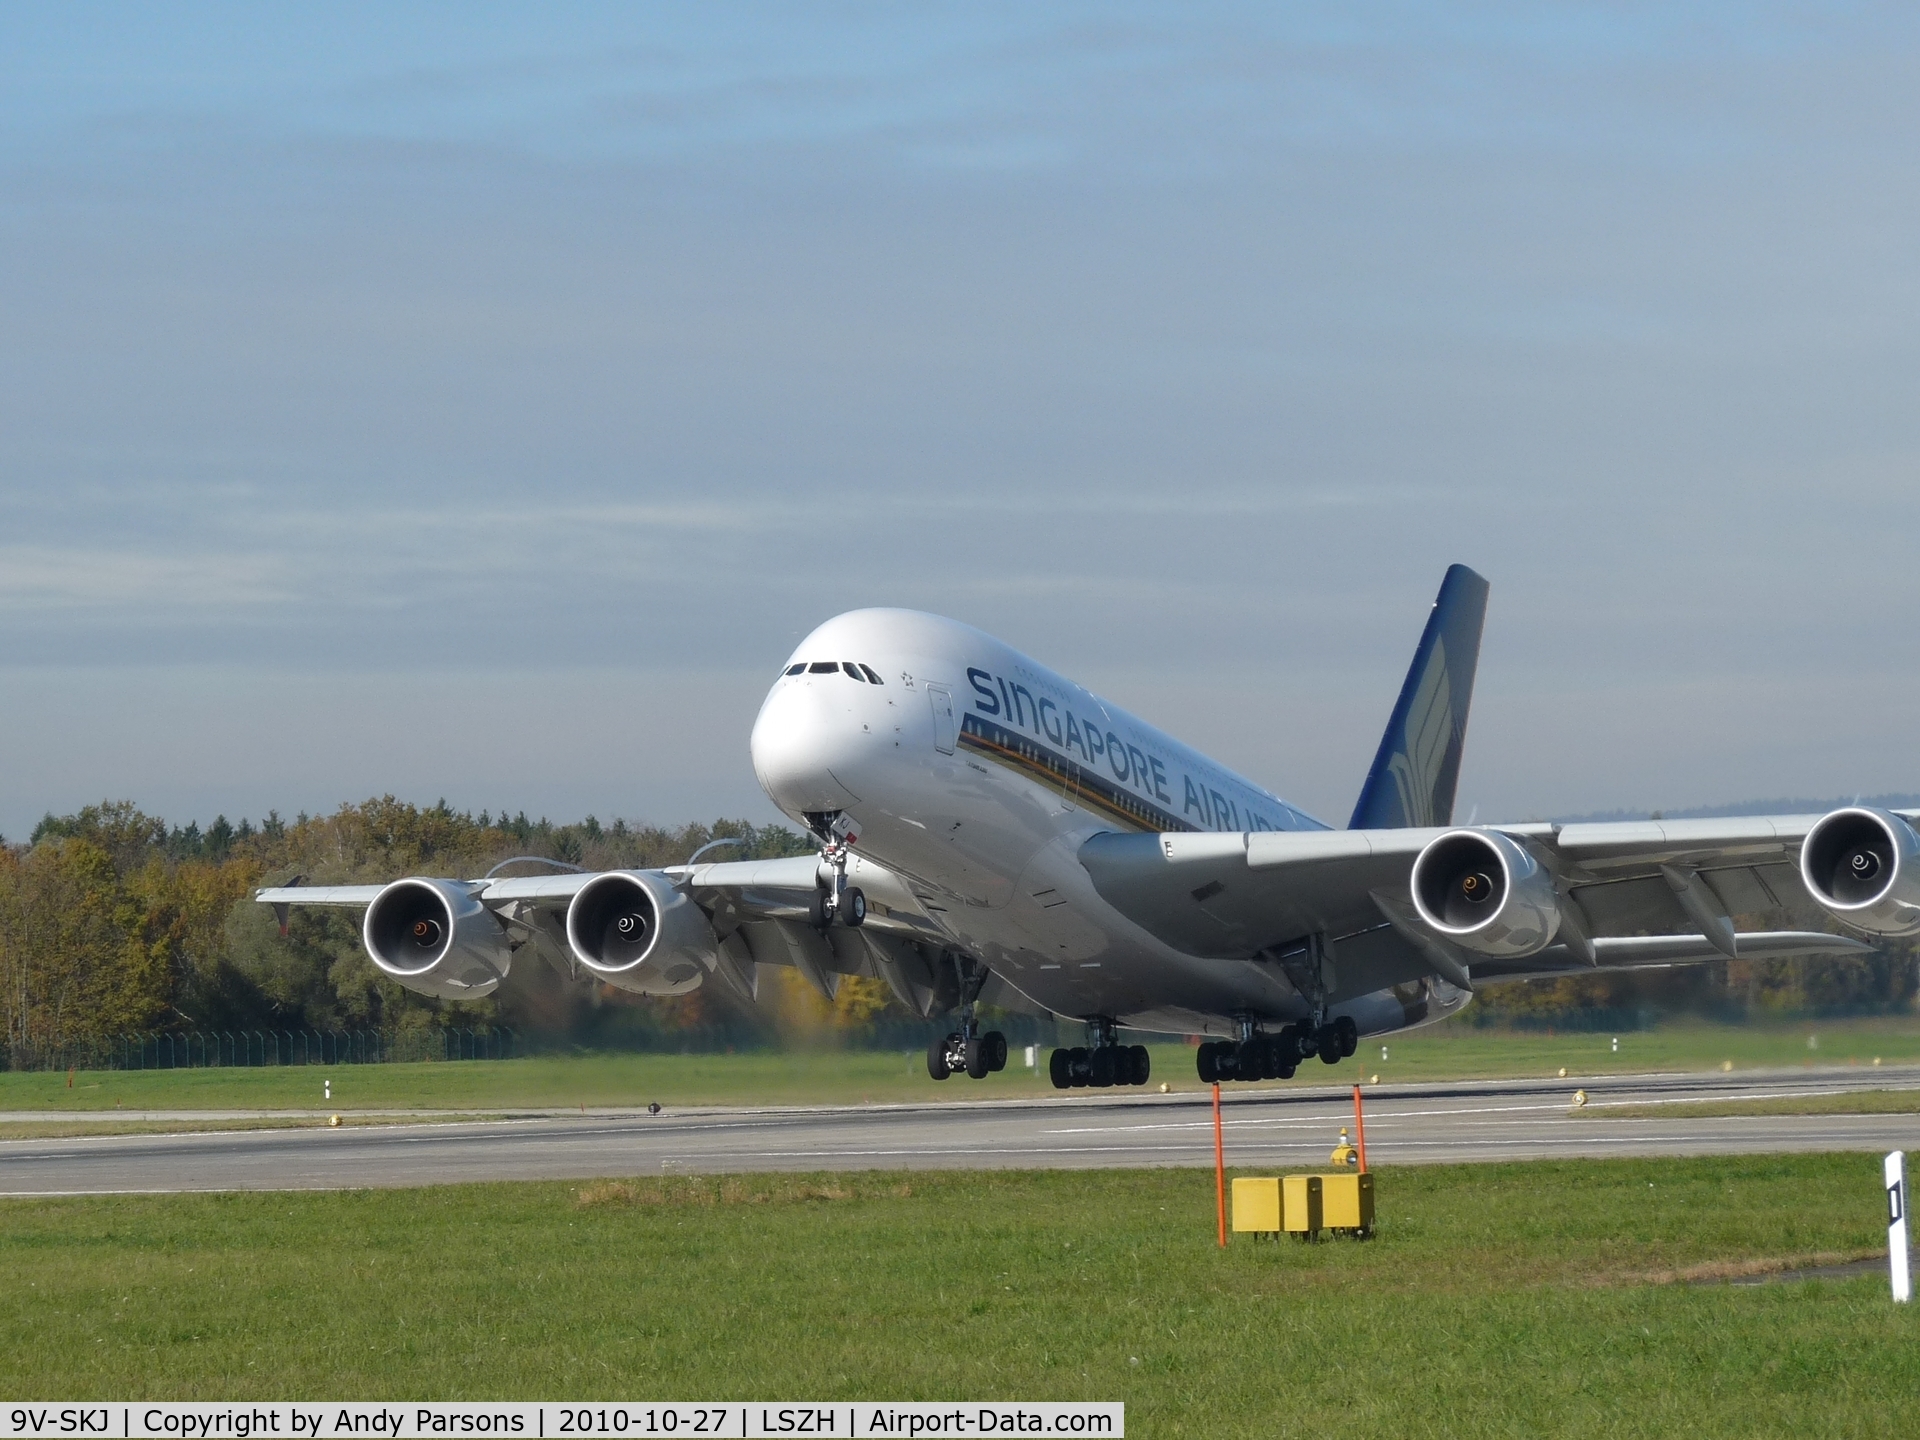 9V-SKJ, 2009 Airbus A380-841 C/N 045, departing Zurich